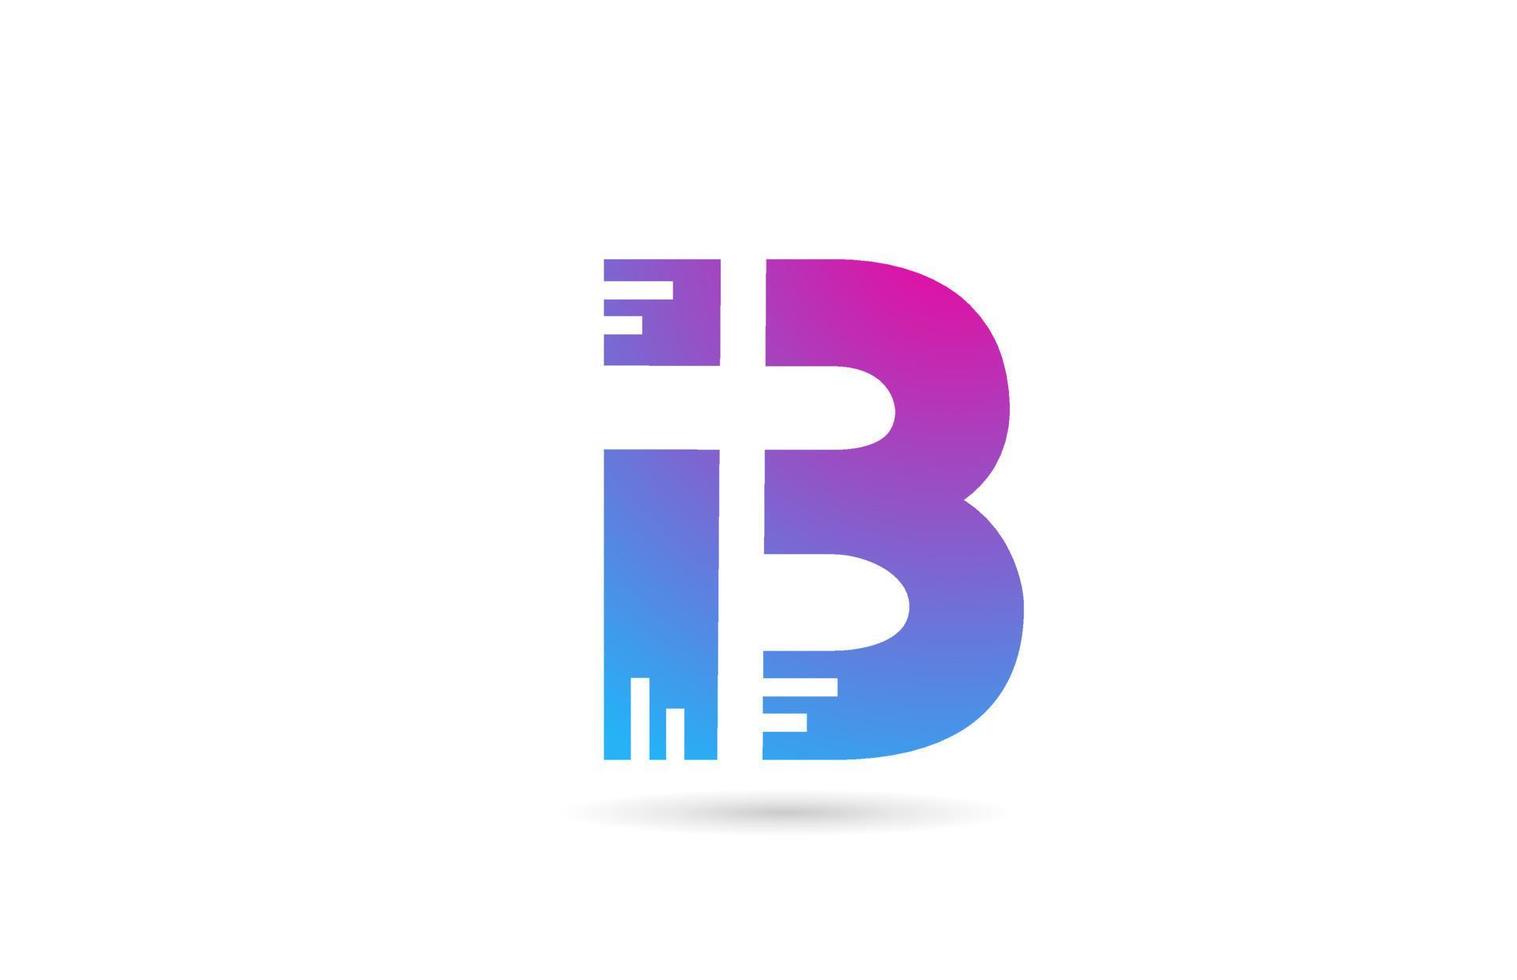 b logotipo da letra do alfabeto para negócios e empresas. modelo de cor rosa azul para design de ícones vetor